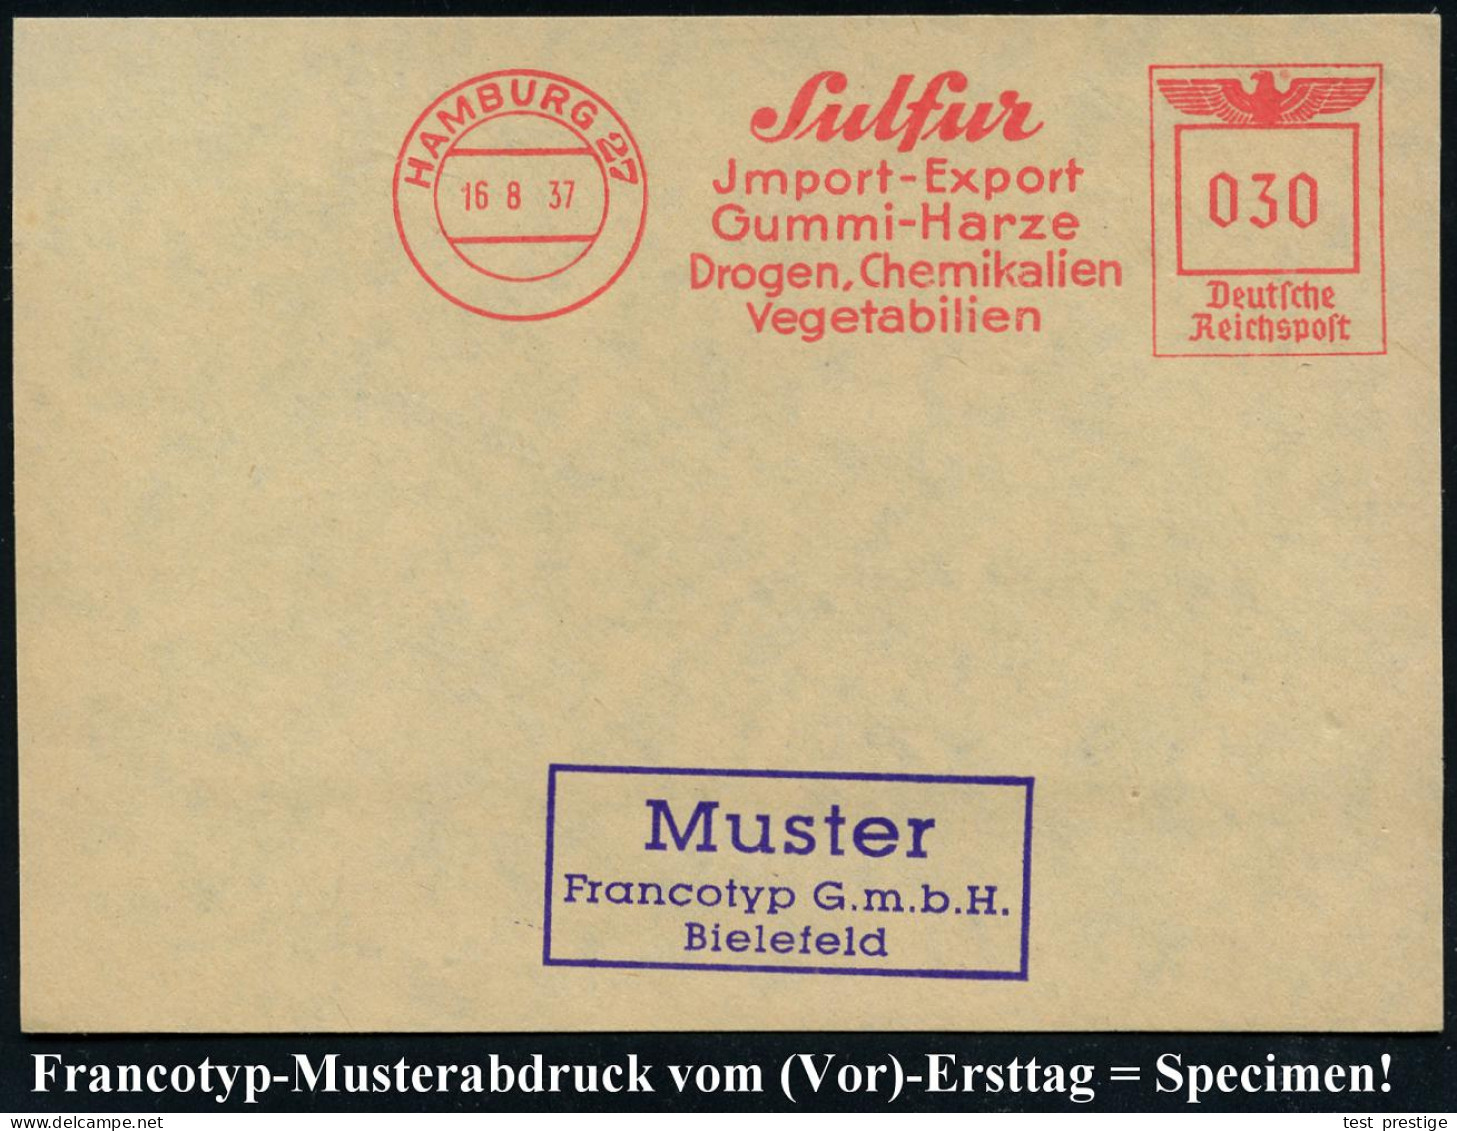 HAMBURG 27/ Sulfur/ Jmport-Export/ Gummi-Harze/ Drogen,Chemikalien.. 1937 (16.8.) AFS-Musterabdruck Francotyp "Reichsadl - Química